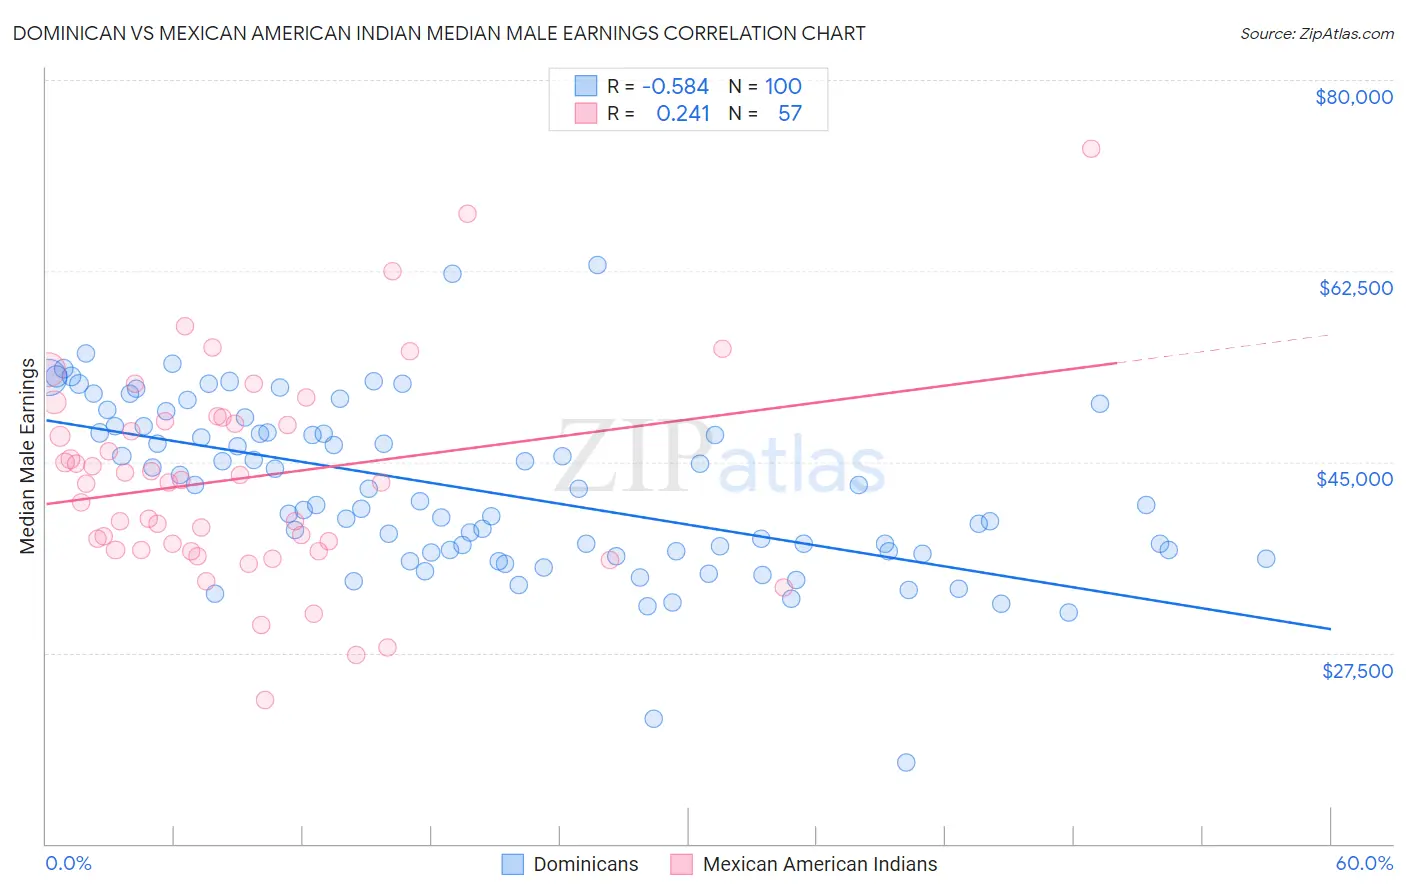 Dominican vs Mexican American Indian Median Male Earnings